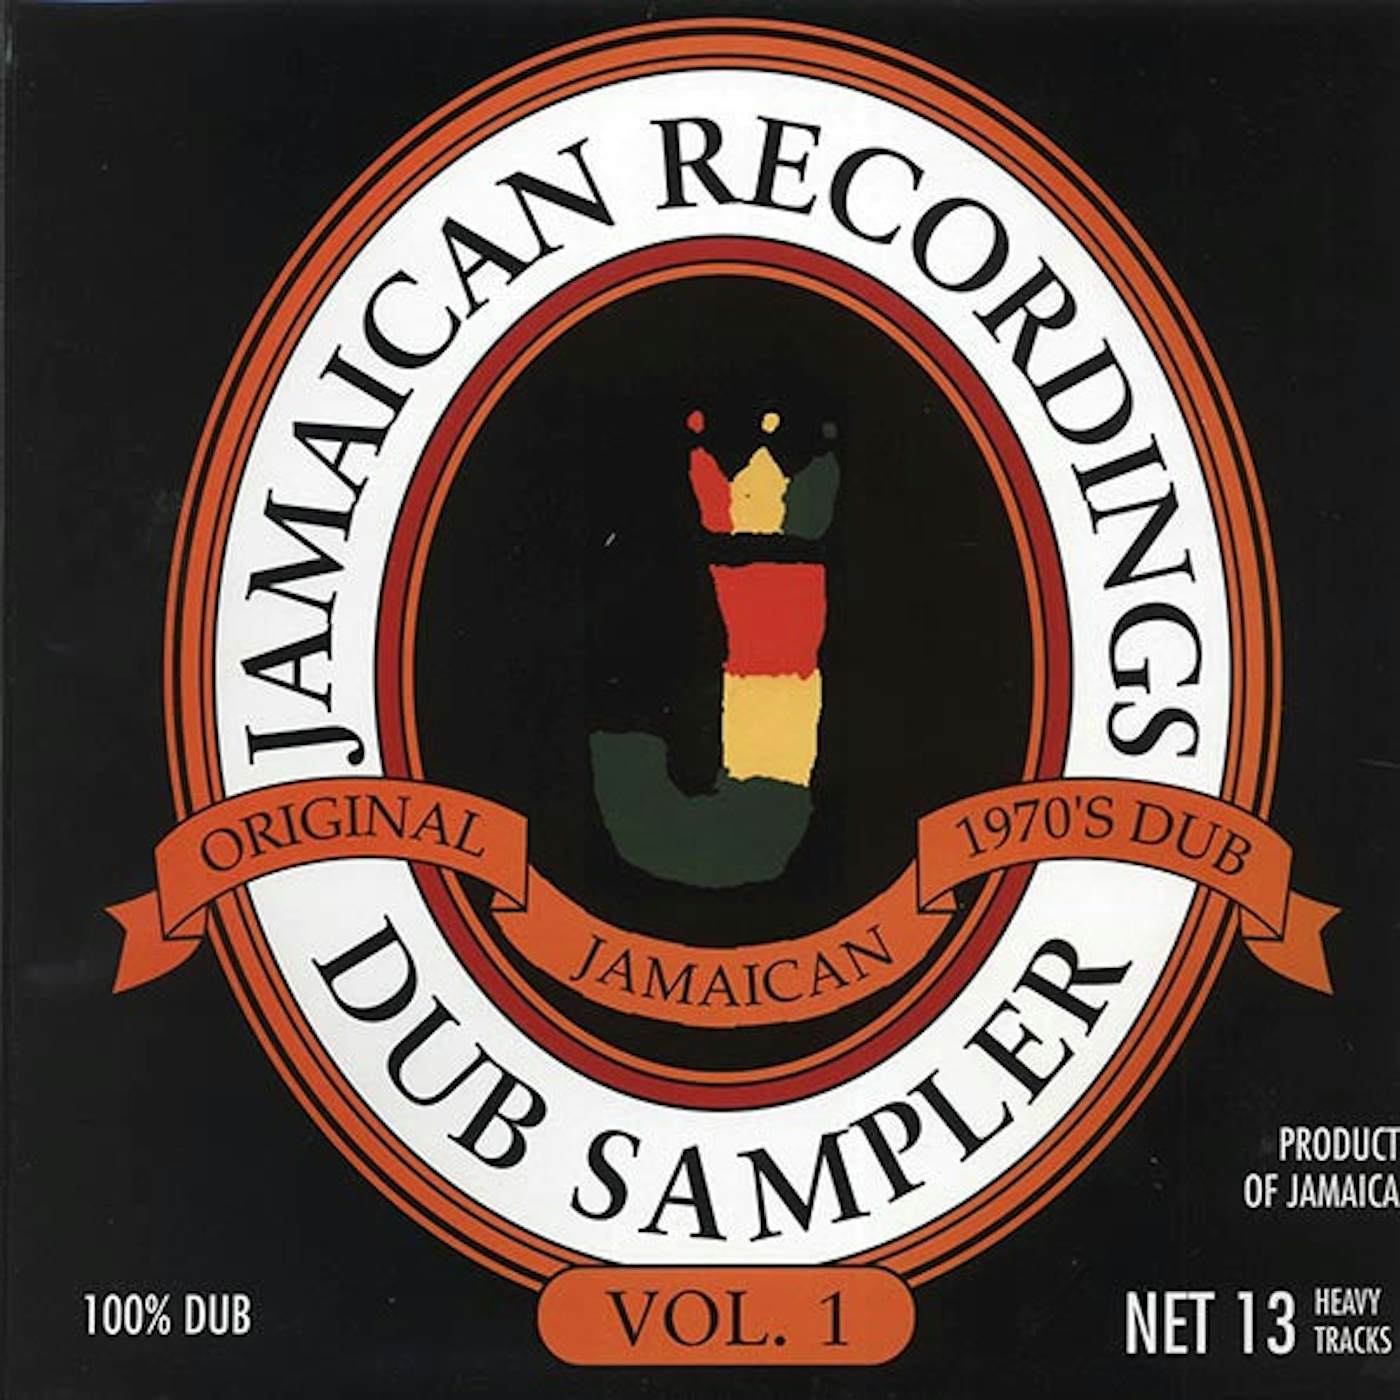 King Tubby, Augustus Pablo, The Revolutionaries, Etc.  LP -  Jamaican Recordings Dub Sampler Volume 1 (180g) (Vinyl)